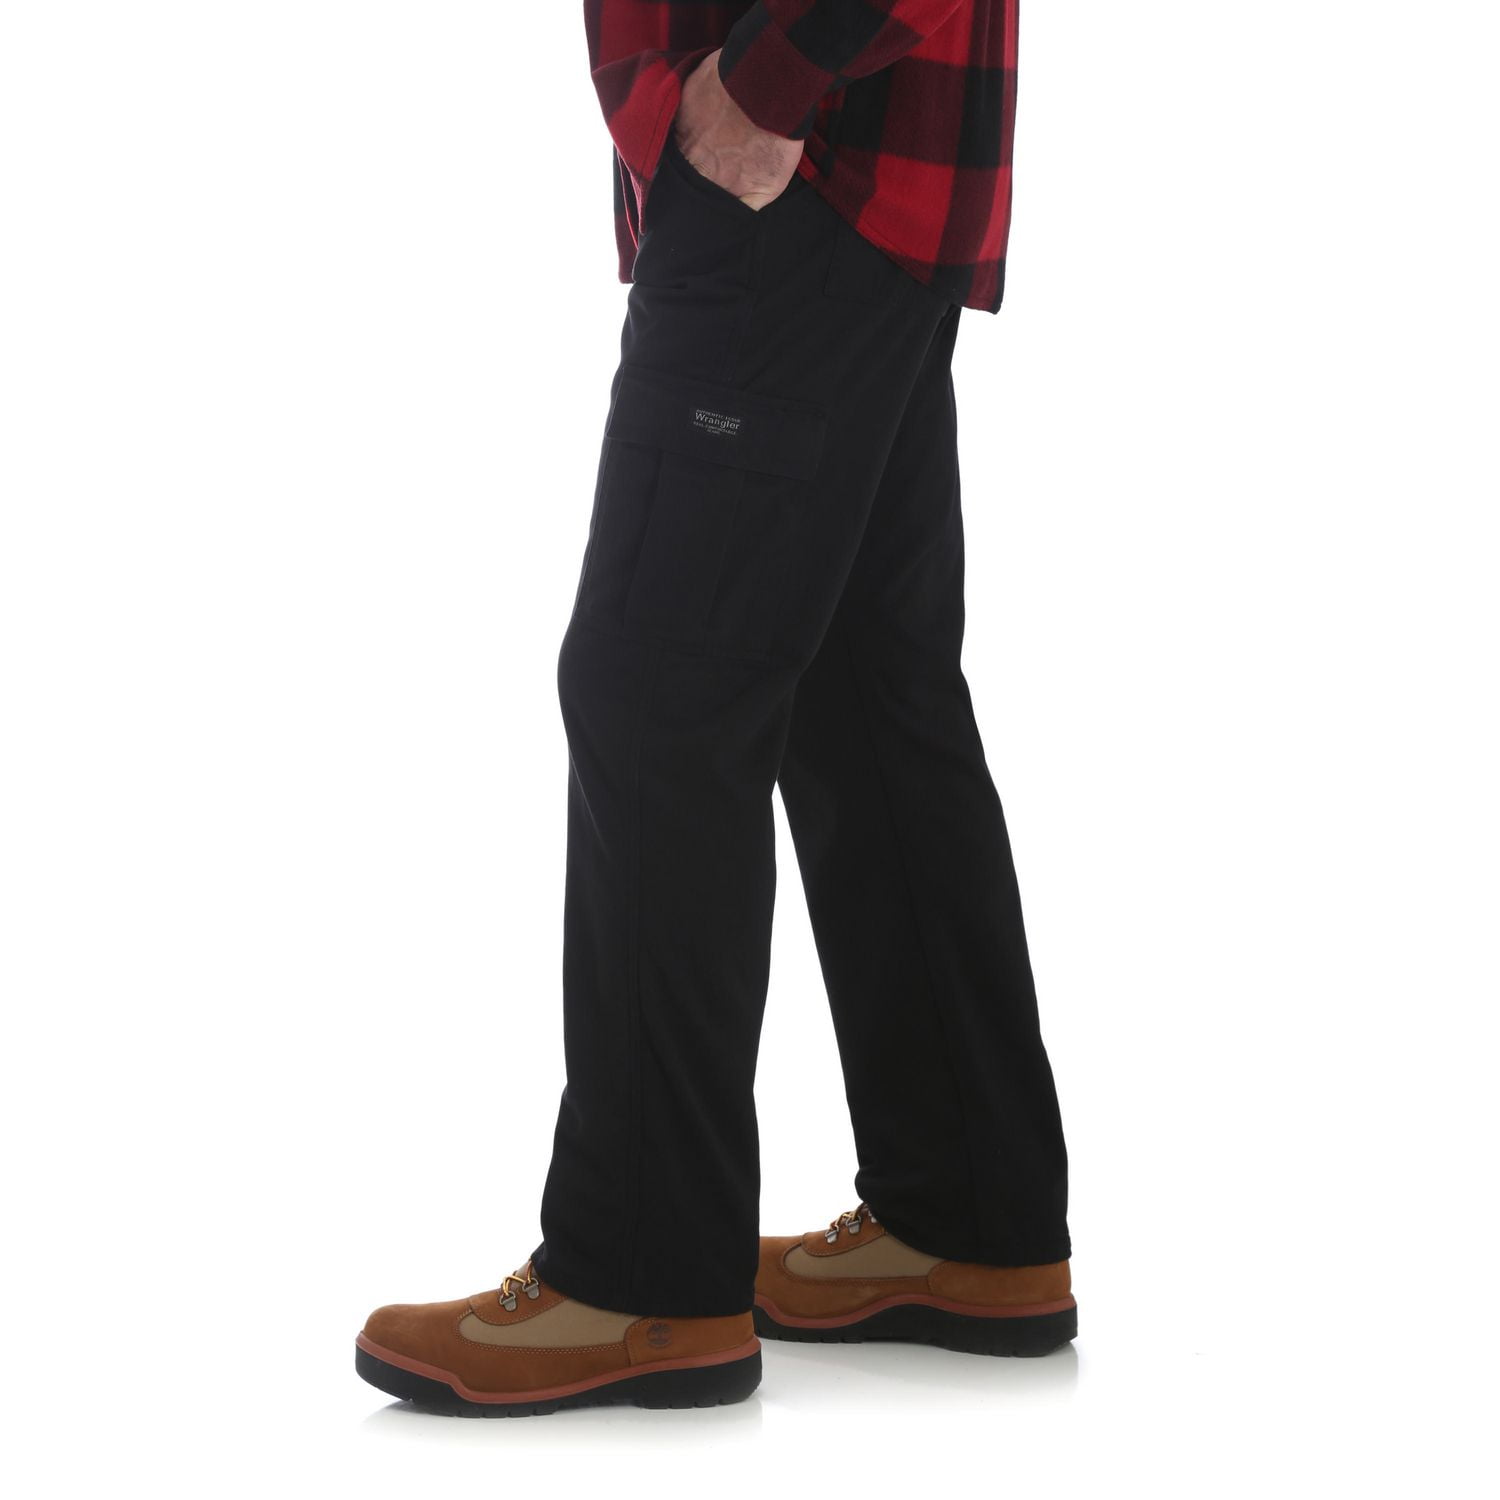 Wrangler All Terrain Gear Pants Mens 36 x 30 Black Fleece Lined ATG New -  Deblu